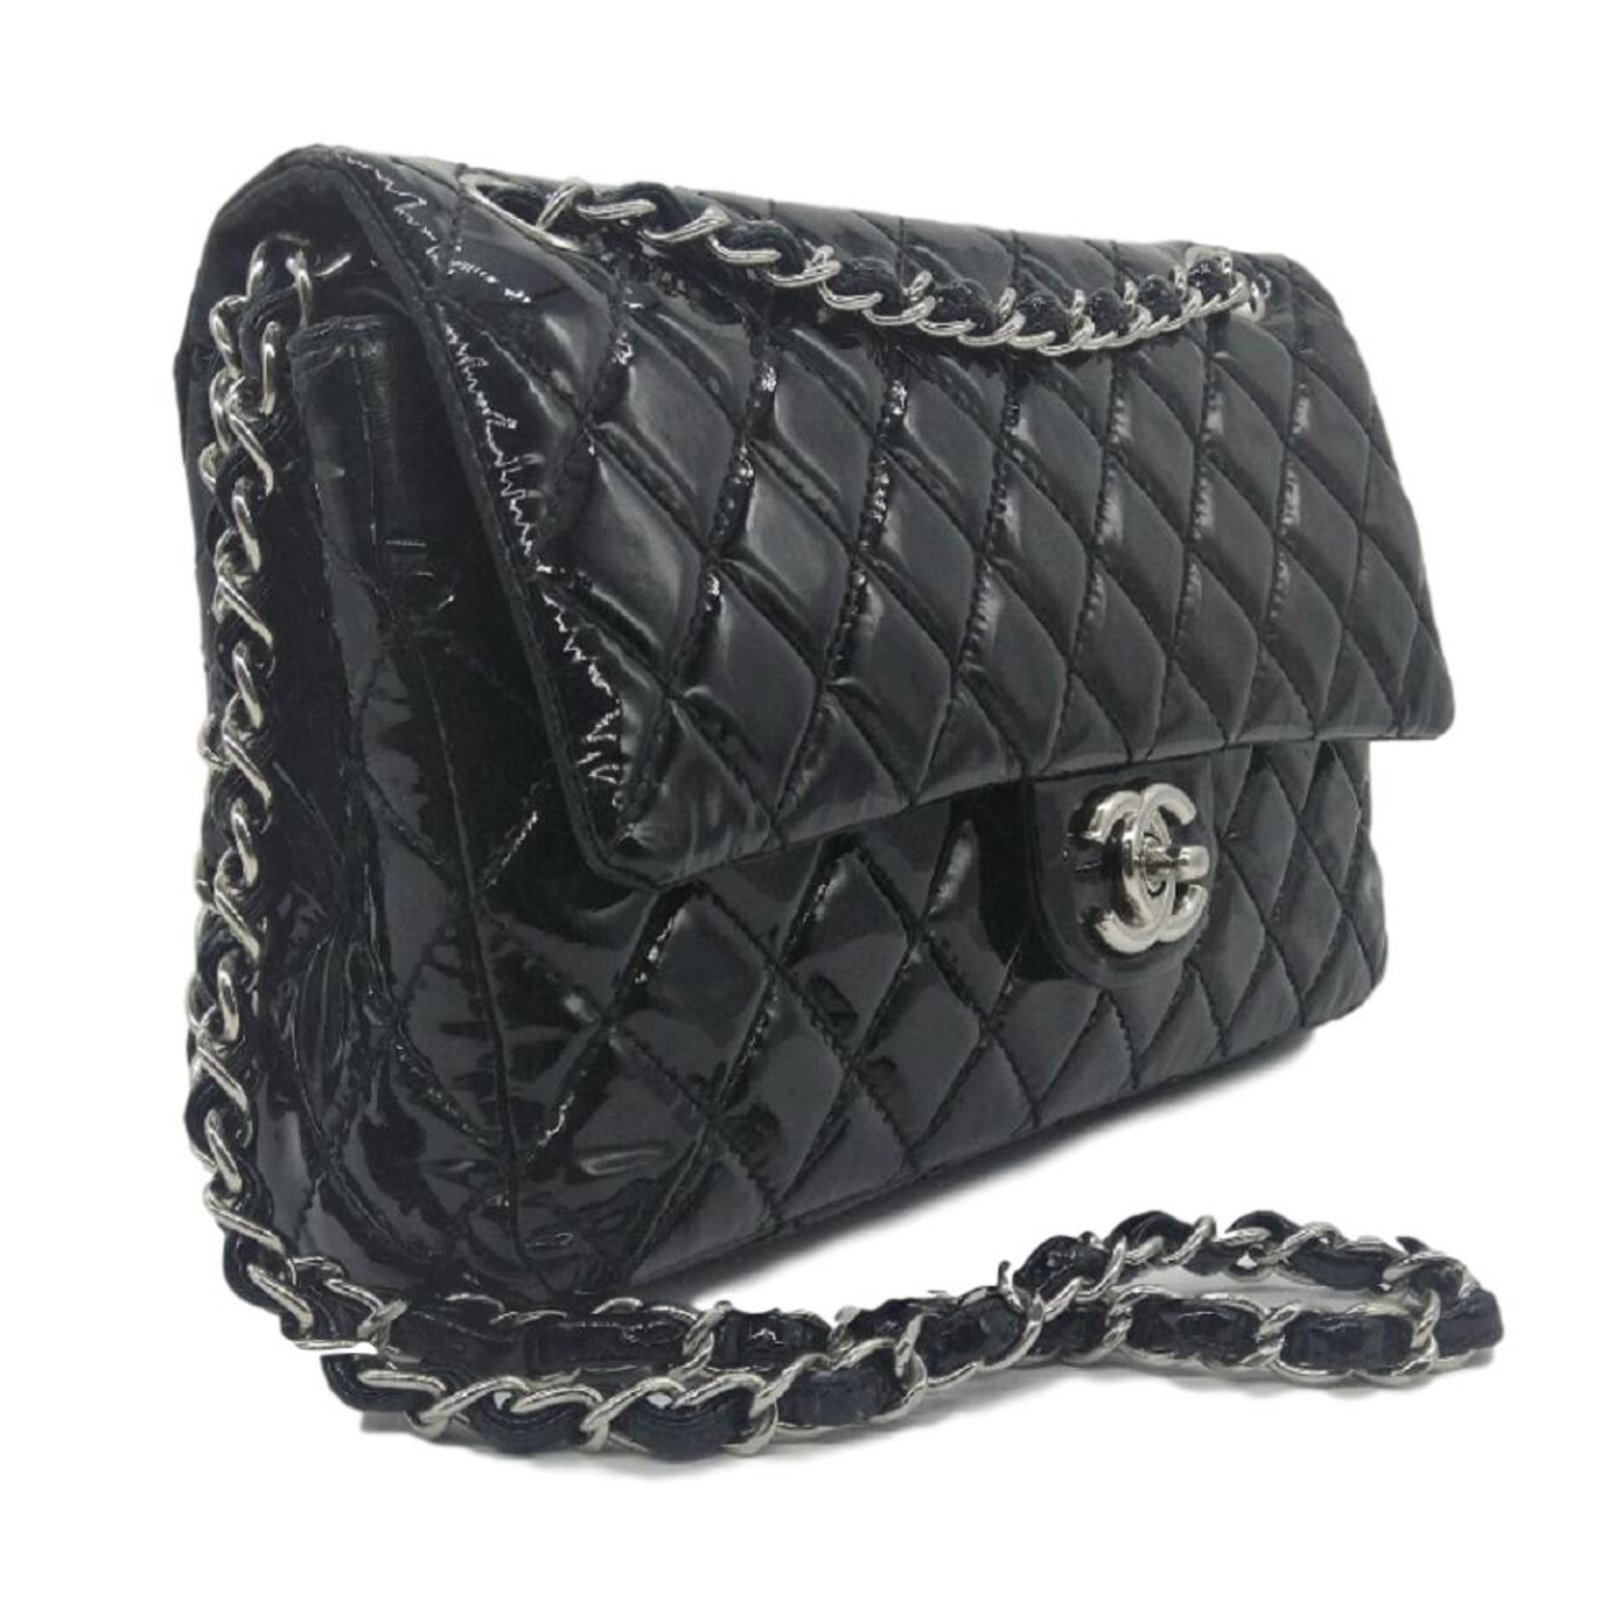 black patent leather chanel handbag white